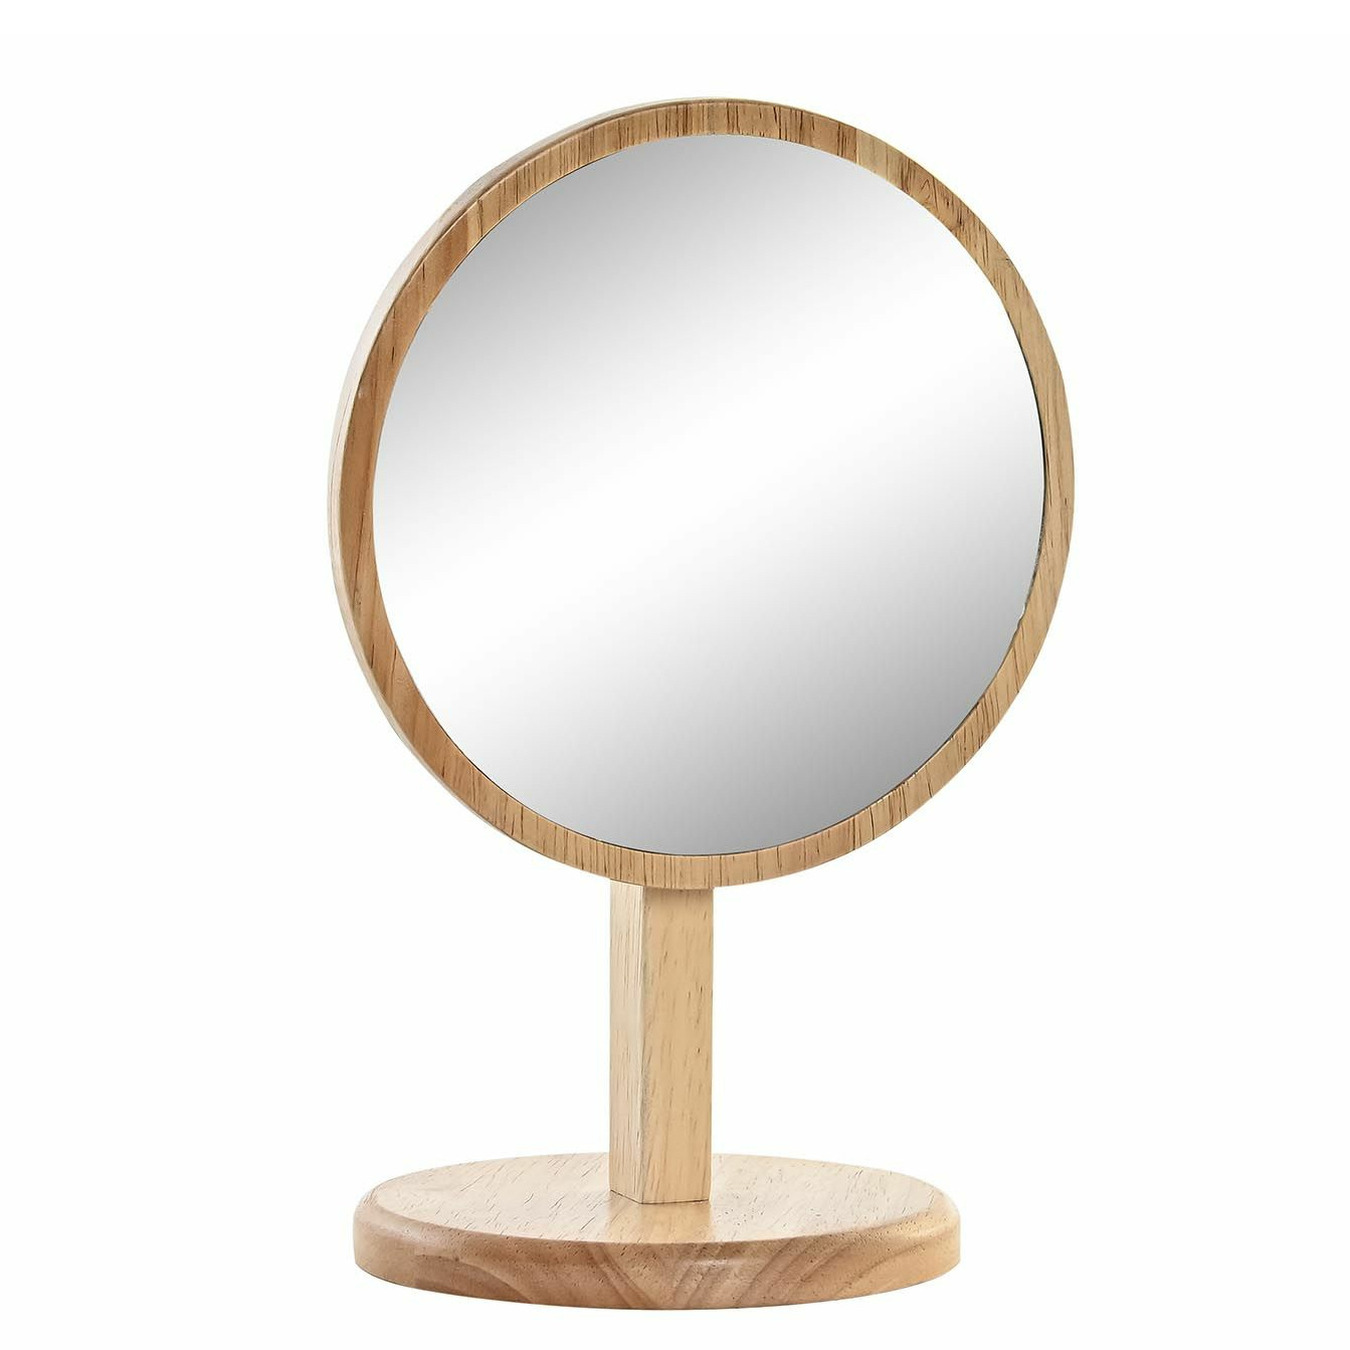 Items Make-up spiegel op standaard rond bamboe 22 cm